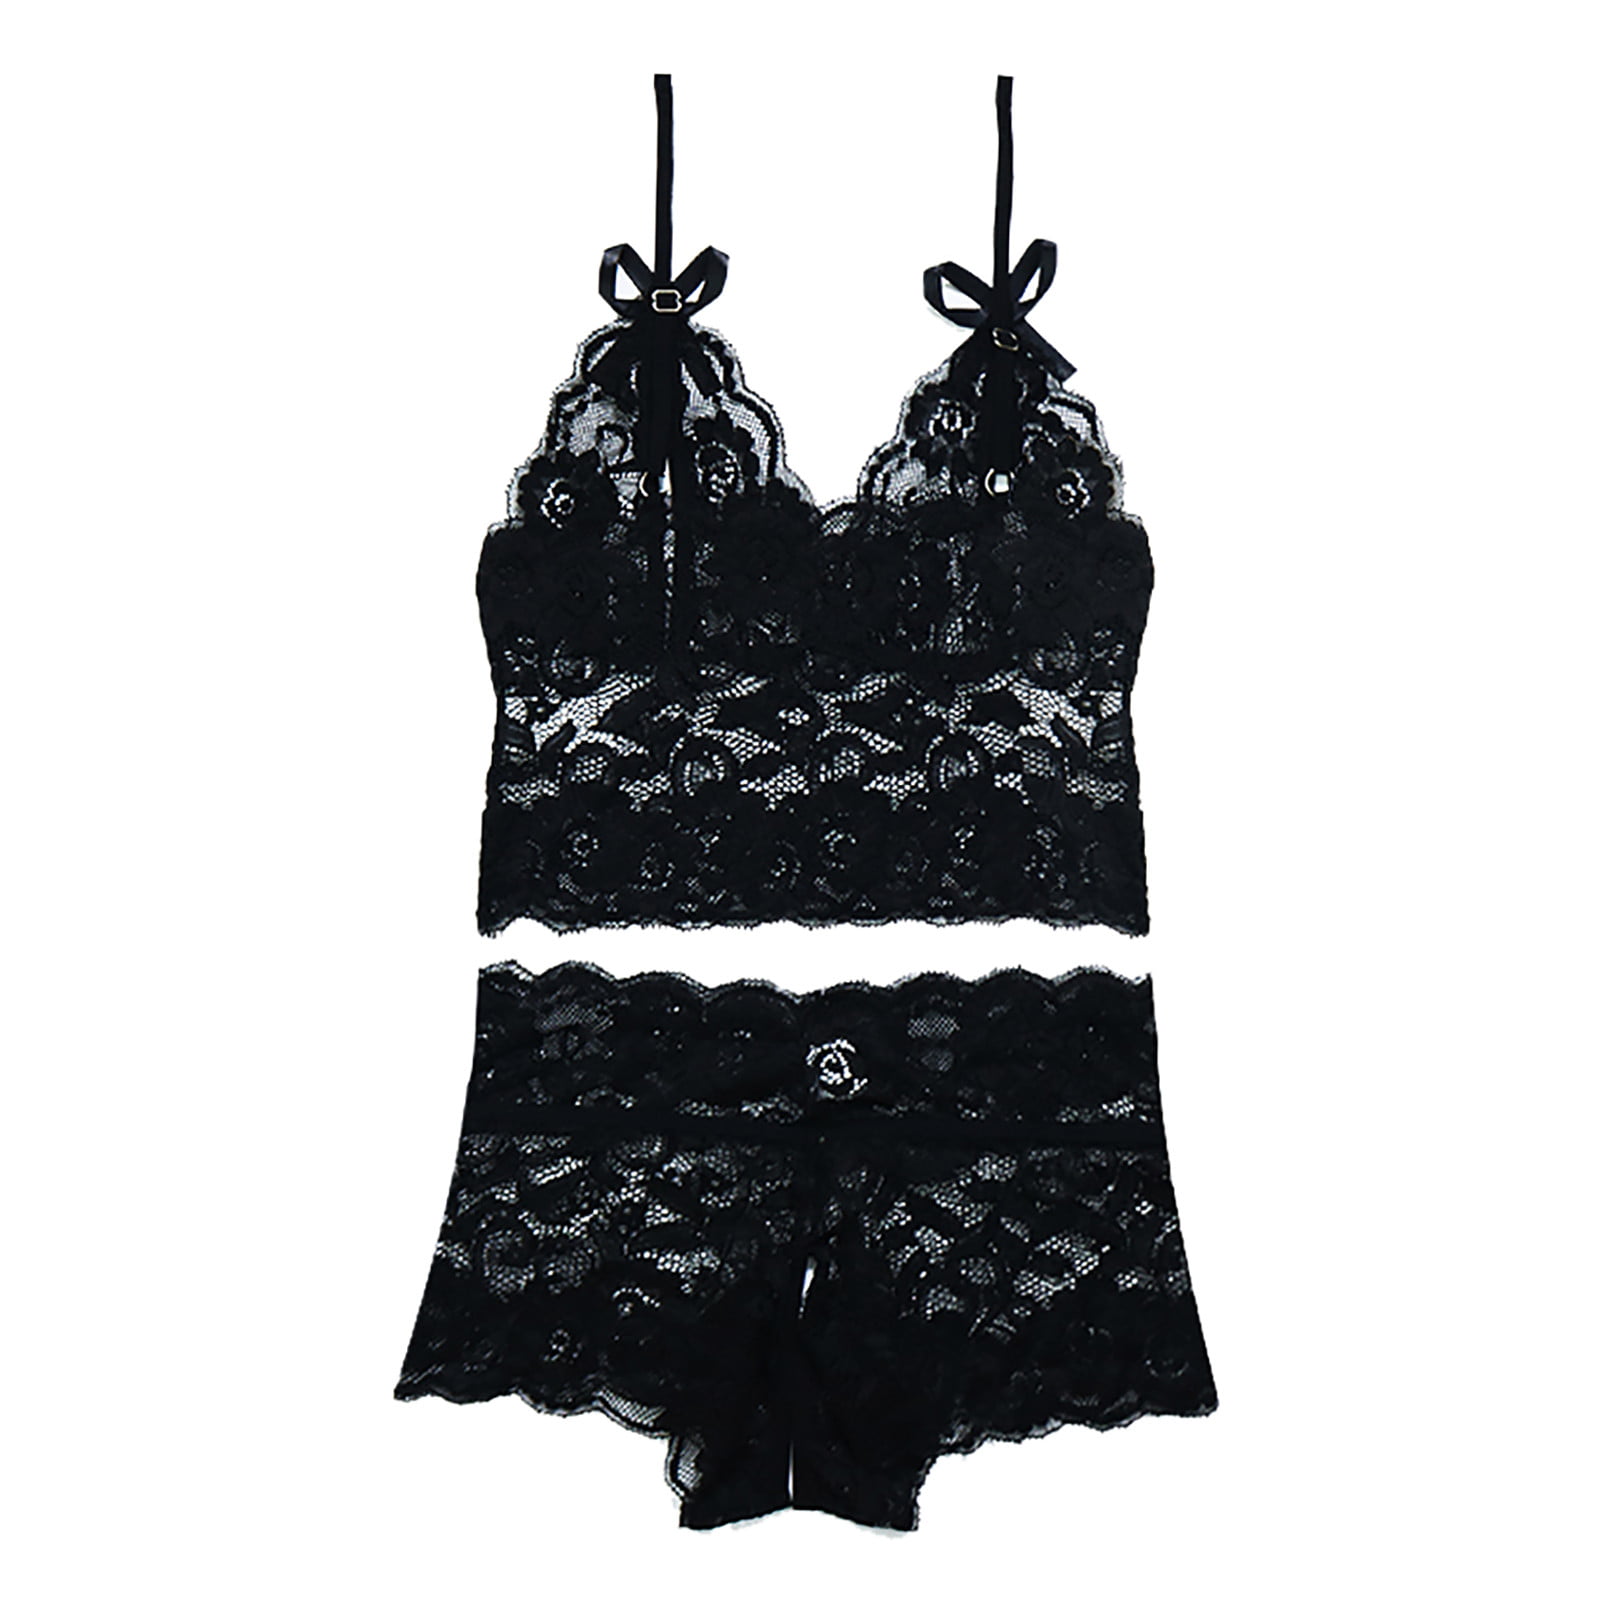 Buy Zimaes-Women Underwear for Sex Flirt 2 Piece Delicate Halter Bras Sets  Black 36D at